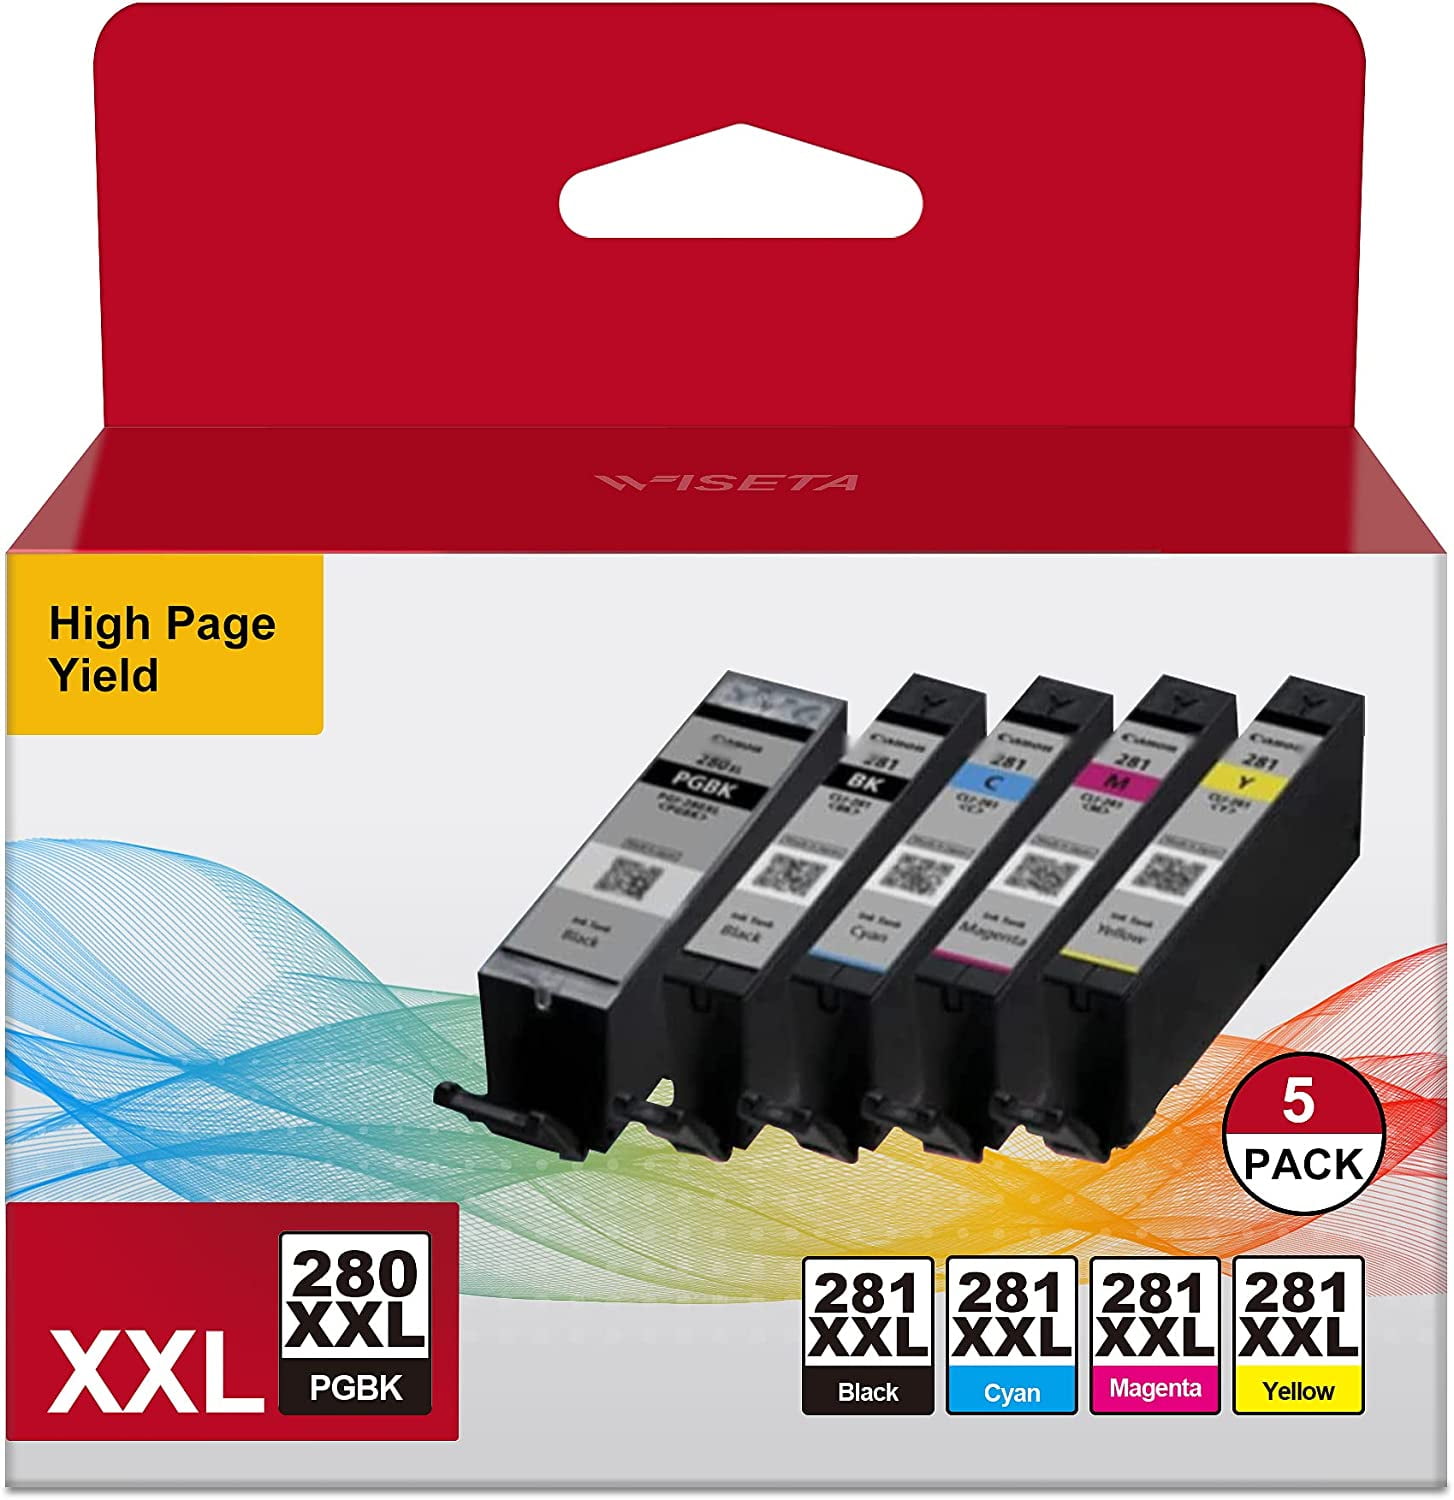 Printer bundle: Canon Pixma TS705a + Canon PGI-580 ink cartridge 5-pack